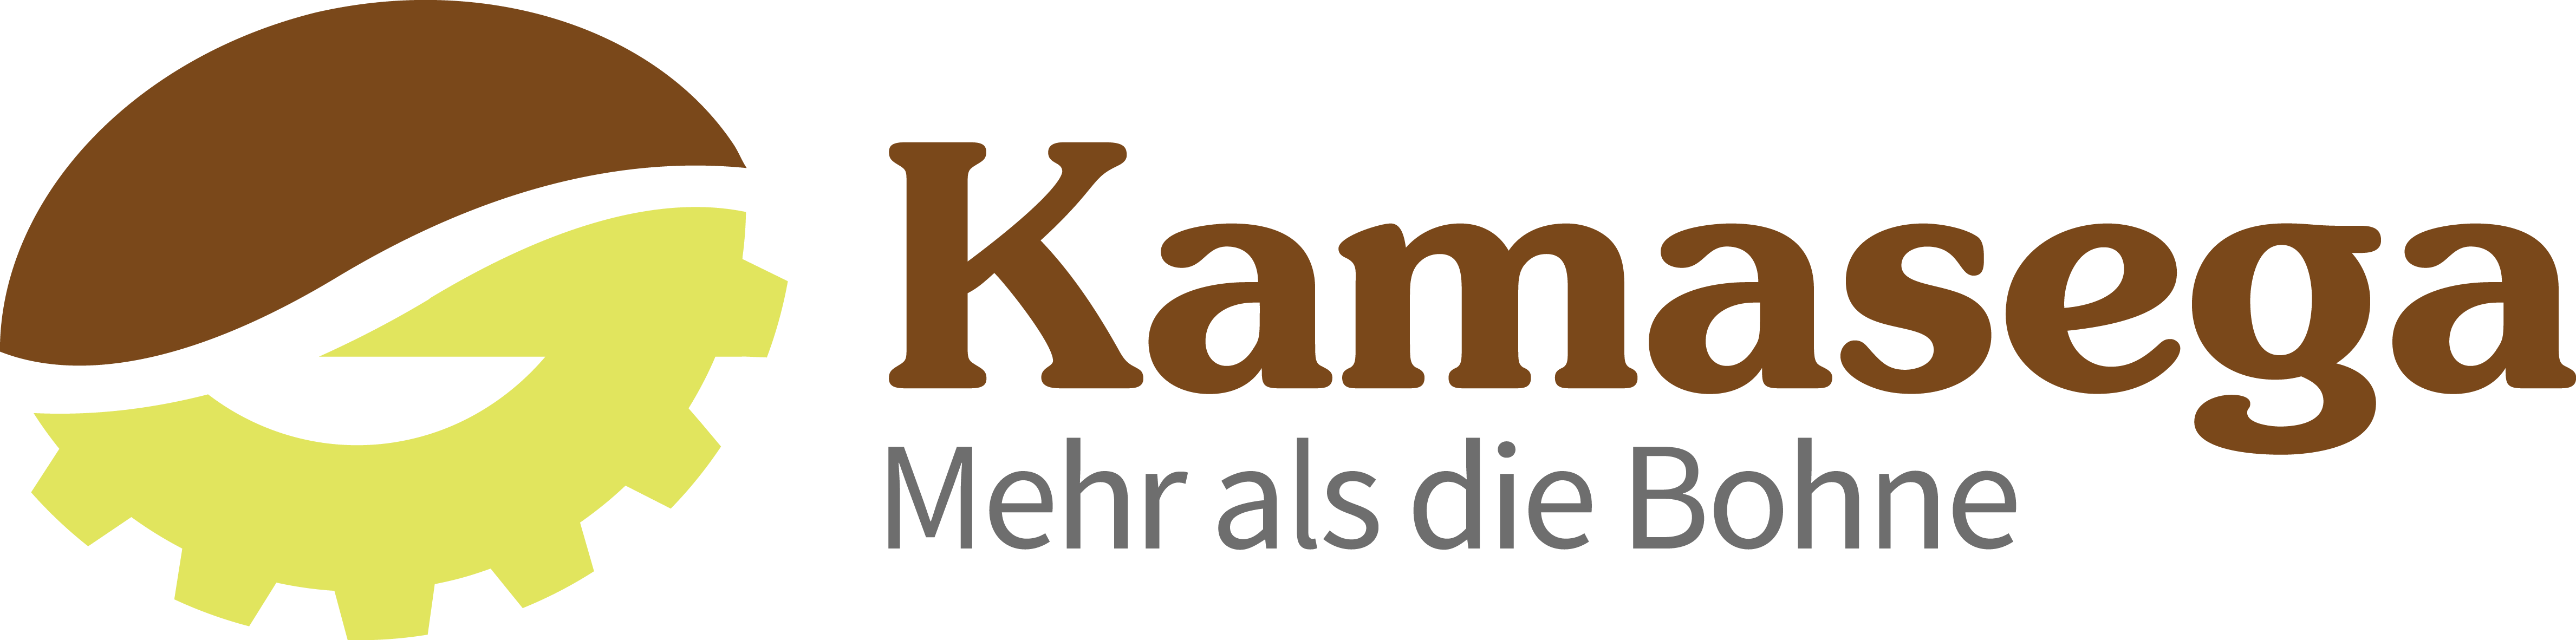 Logo Kamasega